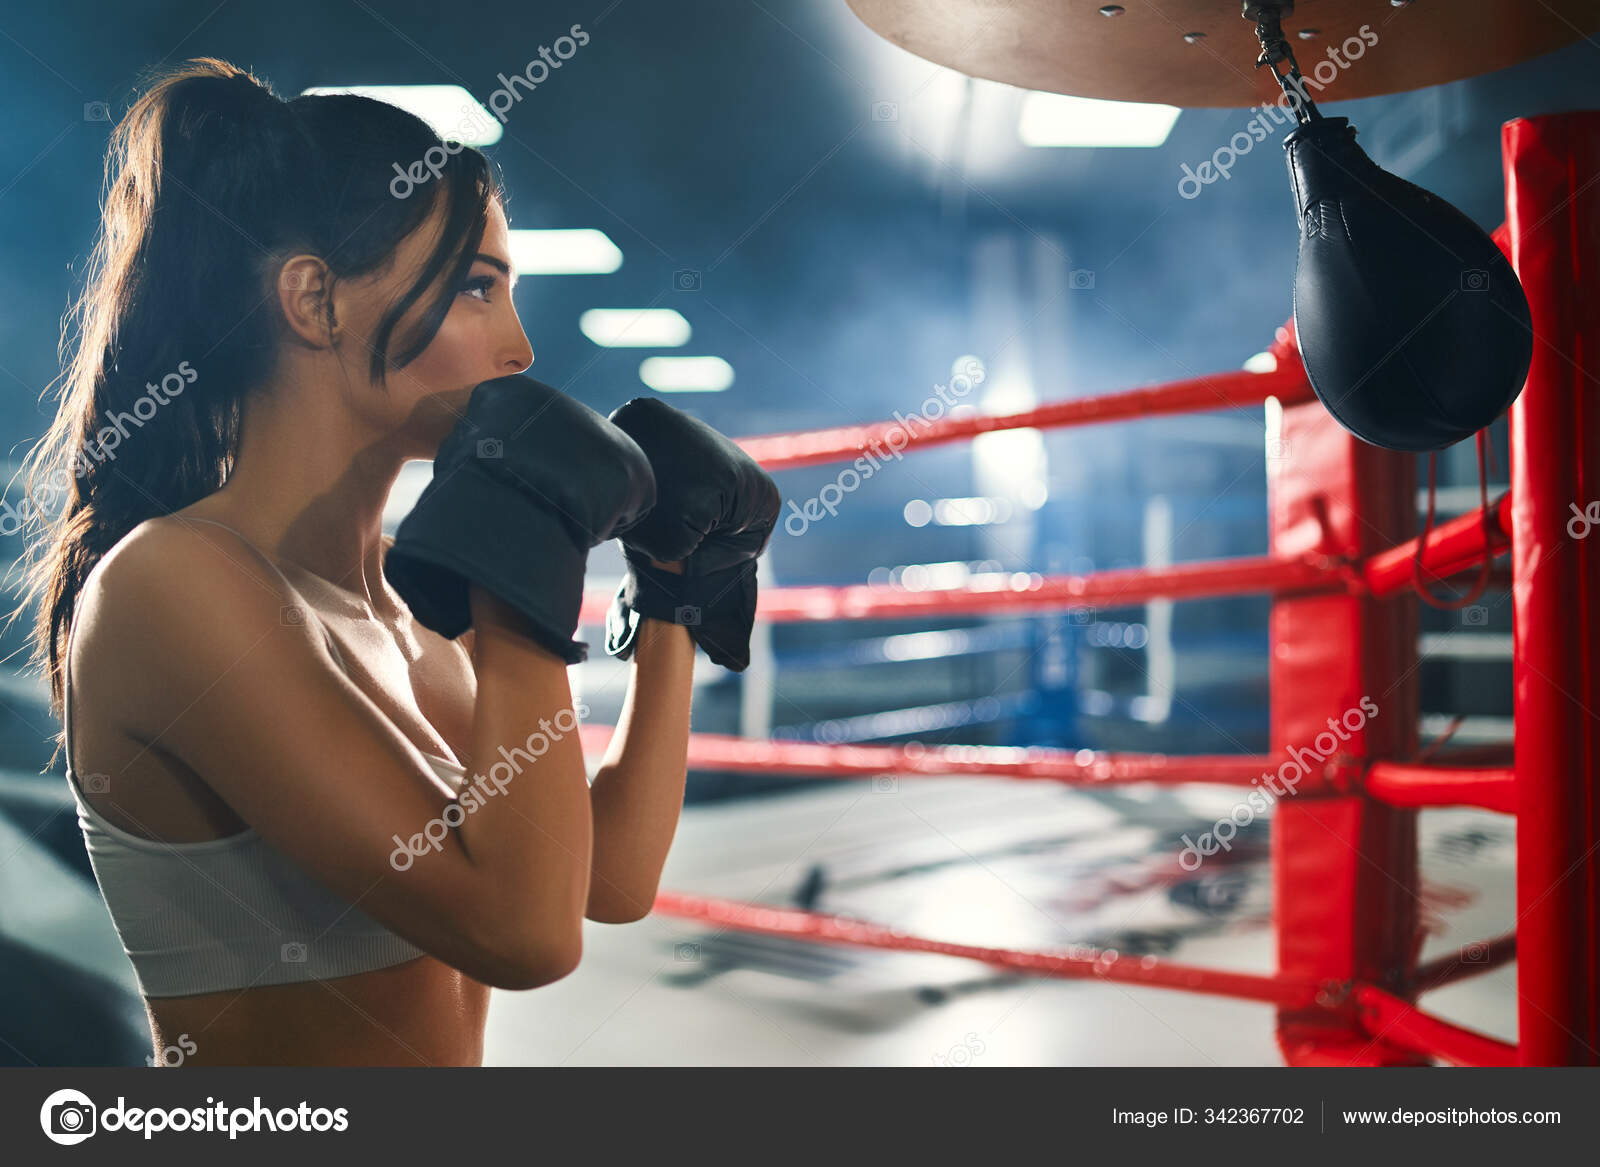 Punching Bag Hits Girl in Face